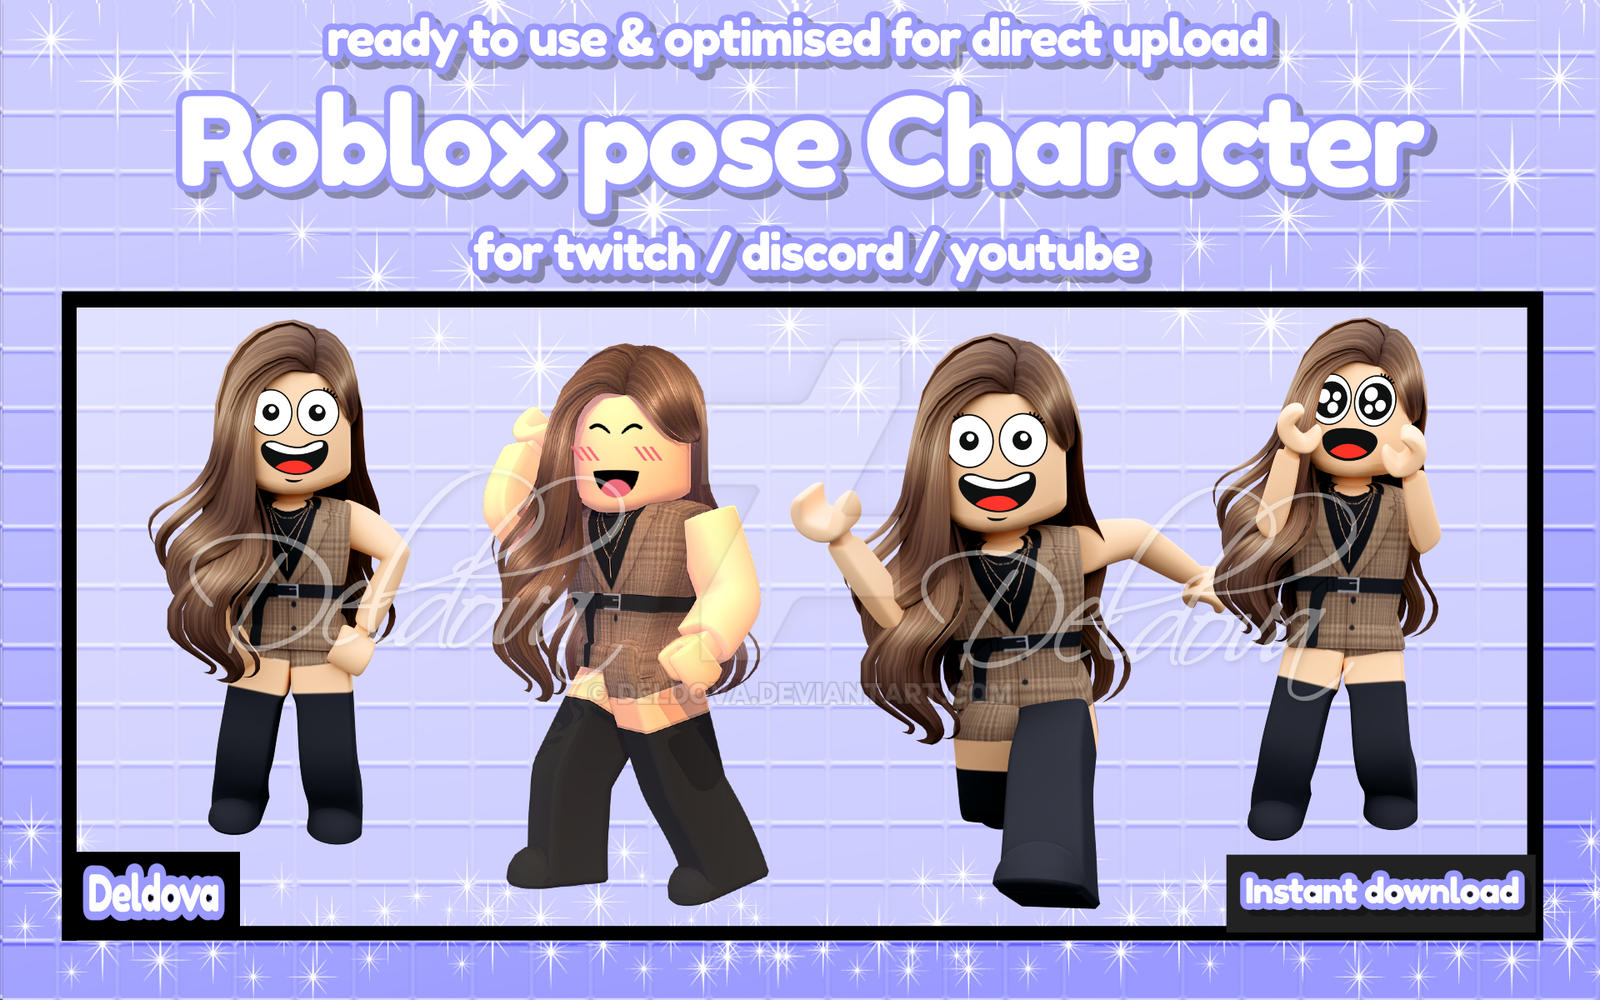 Roblox Noob SVG (Download Now) 